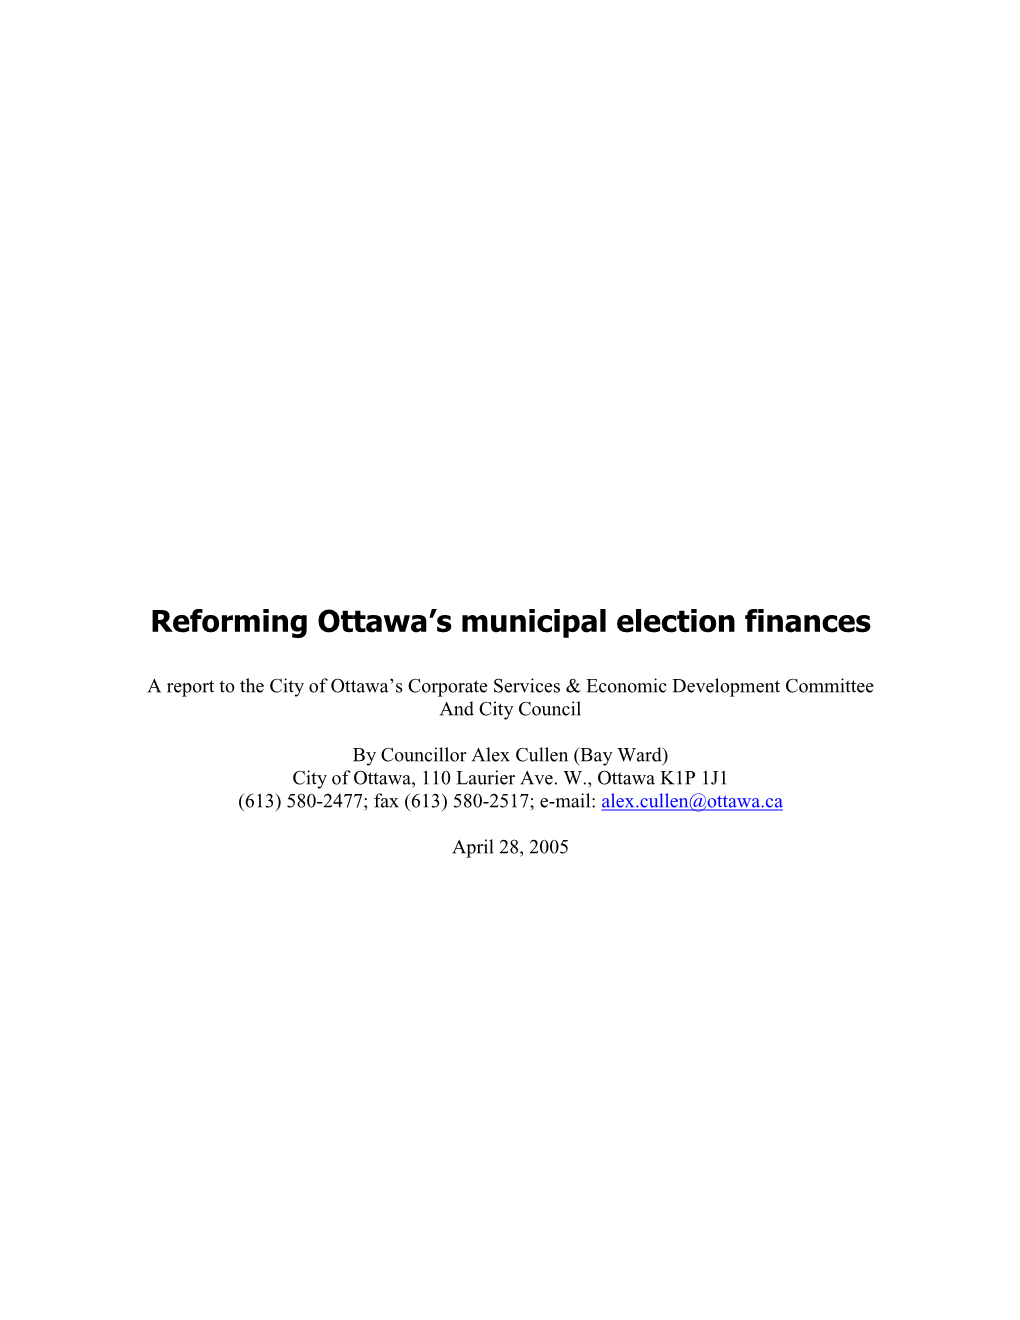 Reforming Ottawa's Municipal Election Finances